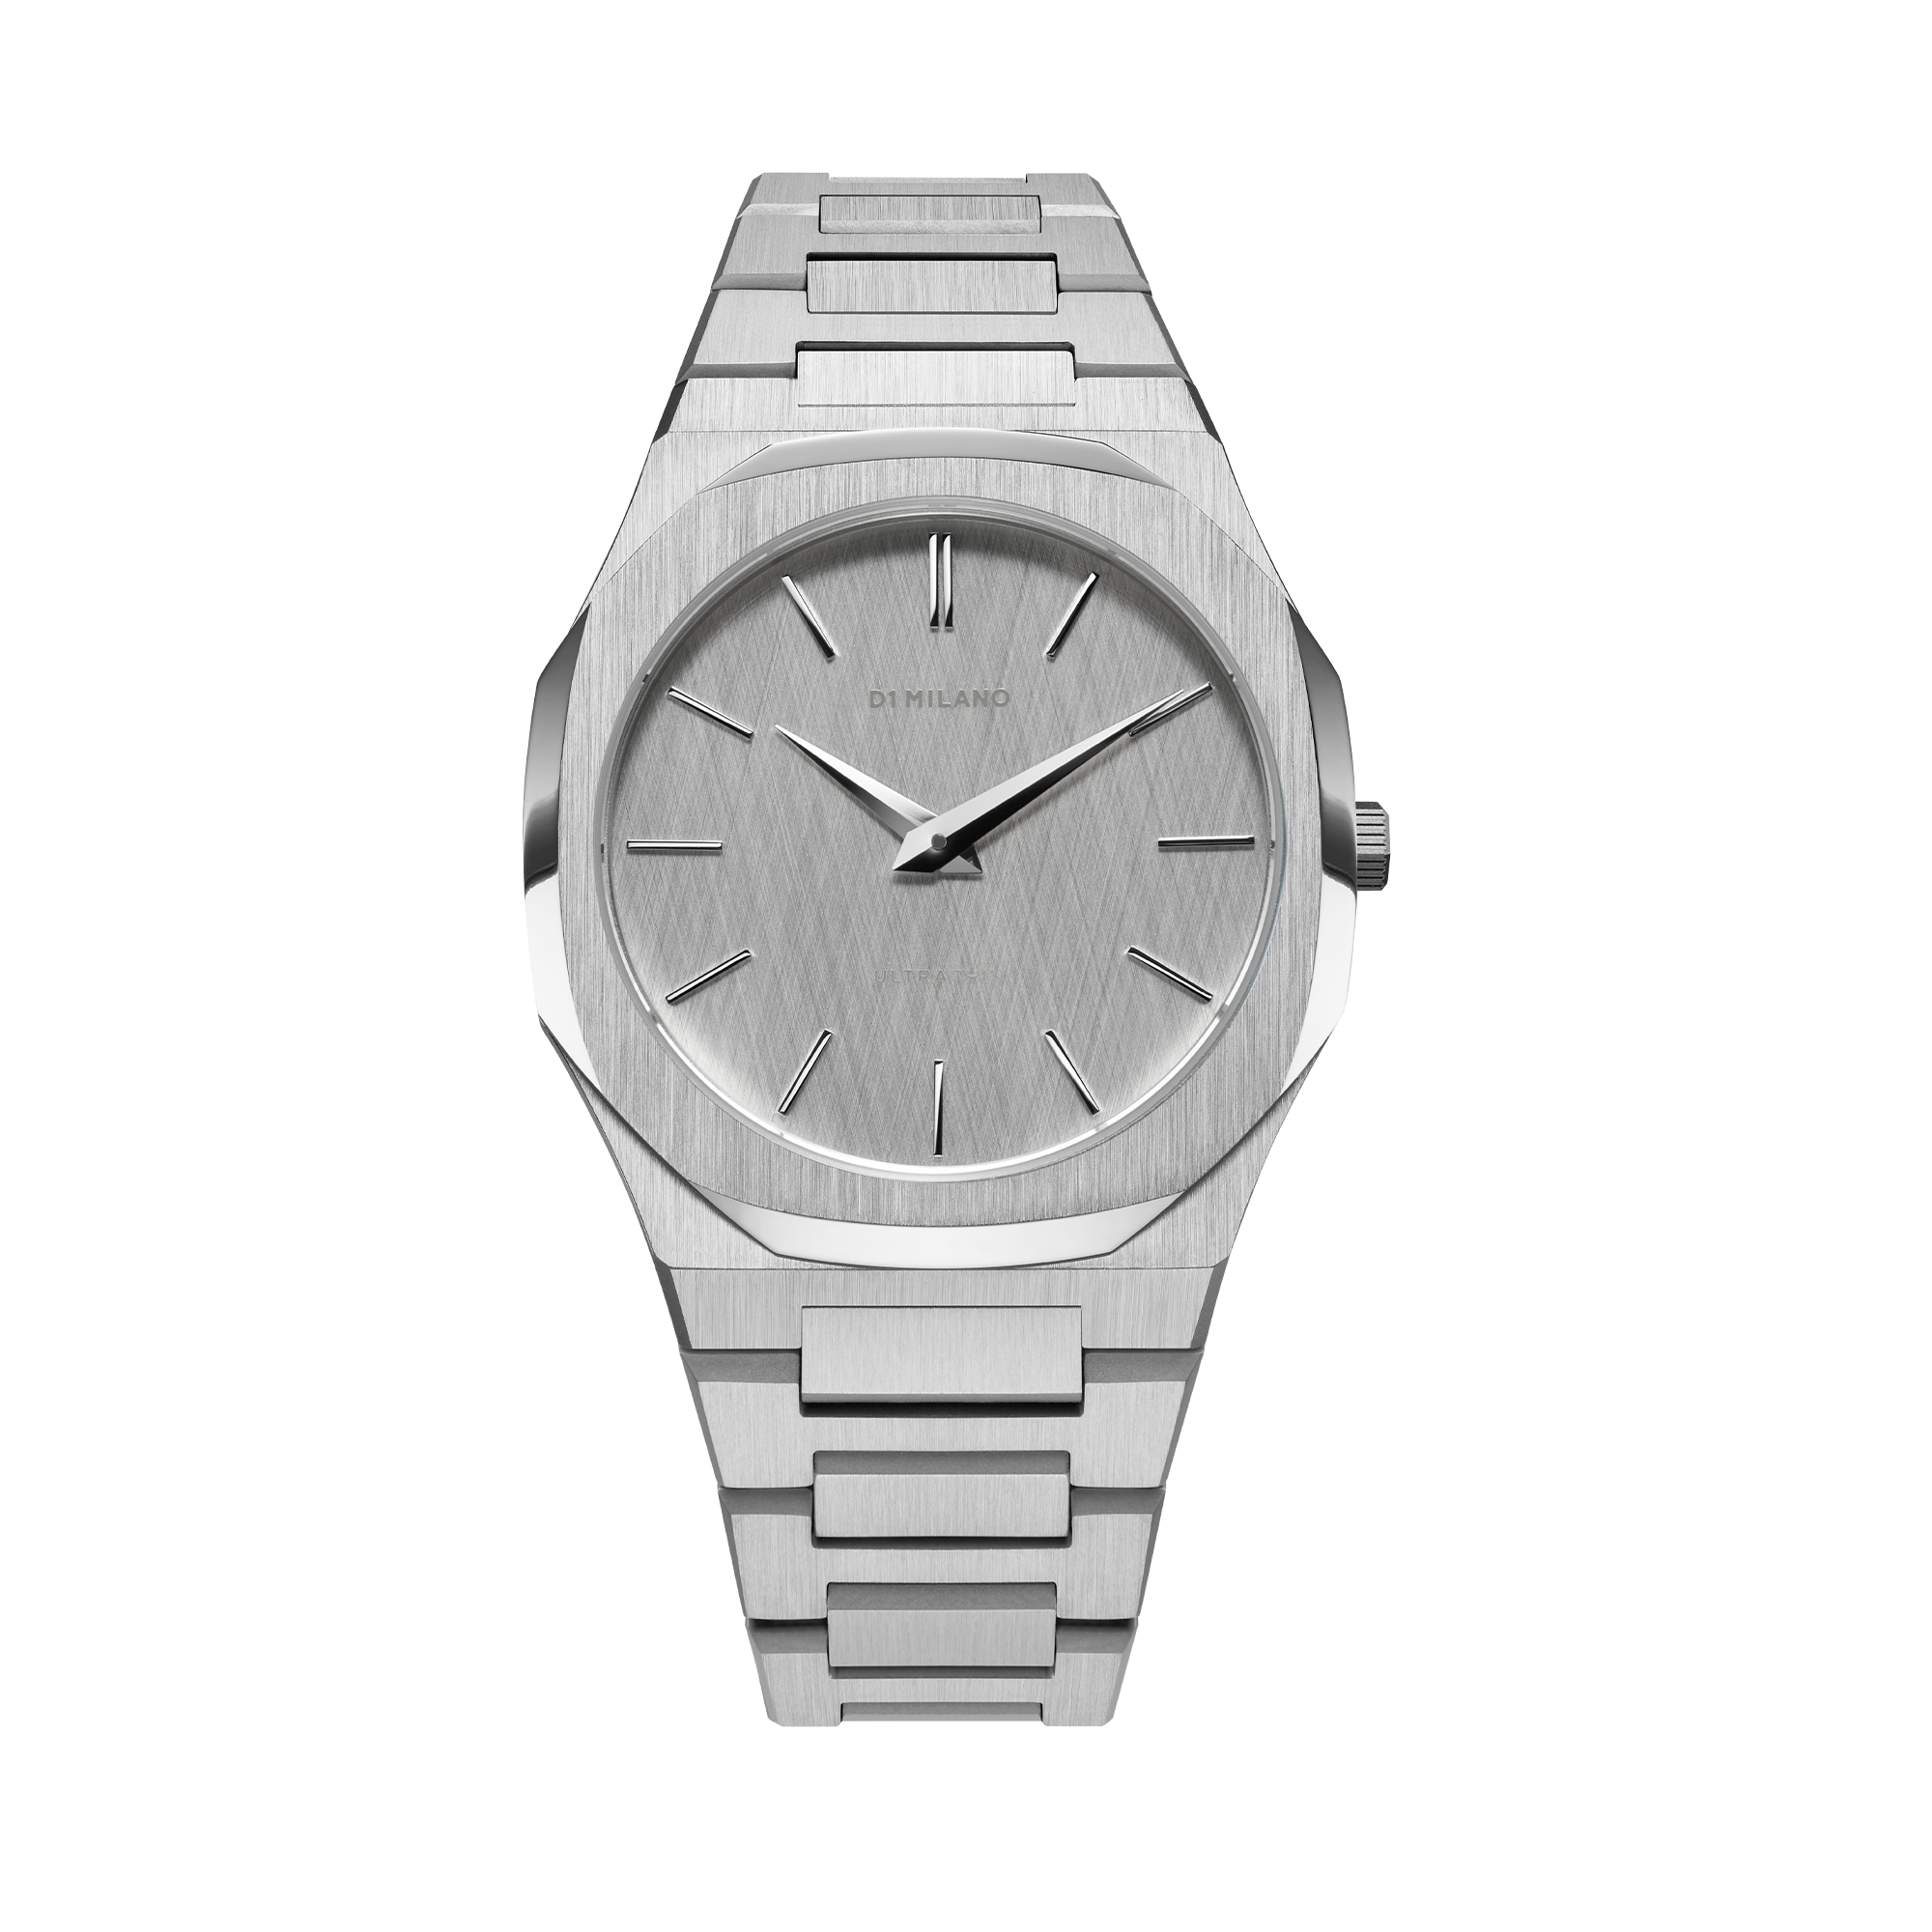 Unisex Linen Ultra Thin Bracelet 40 mm Watch D1-UTBJ23 D1 Milano